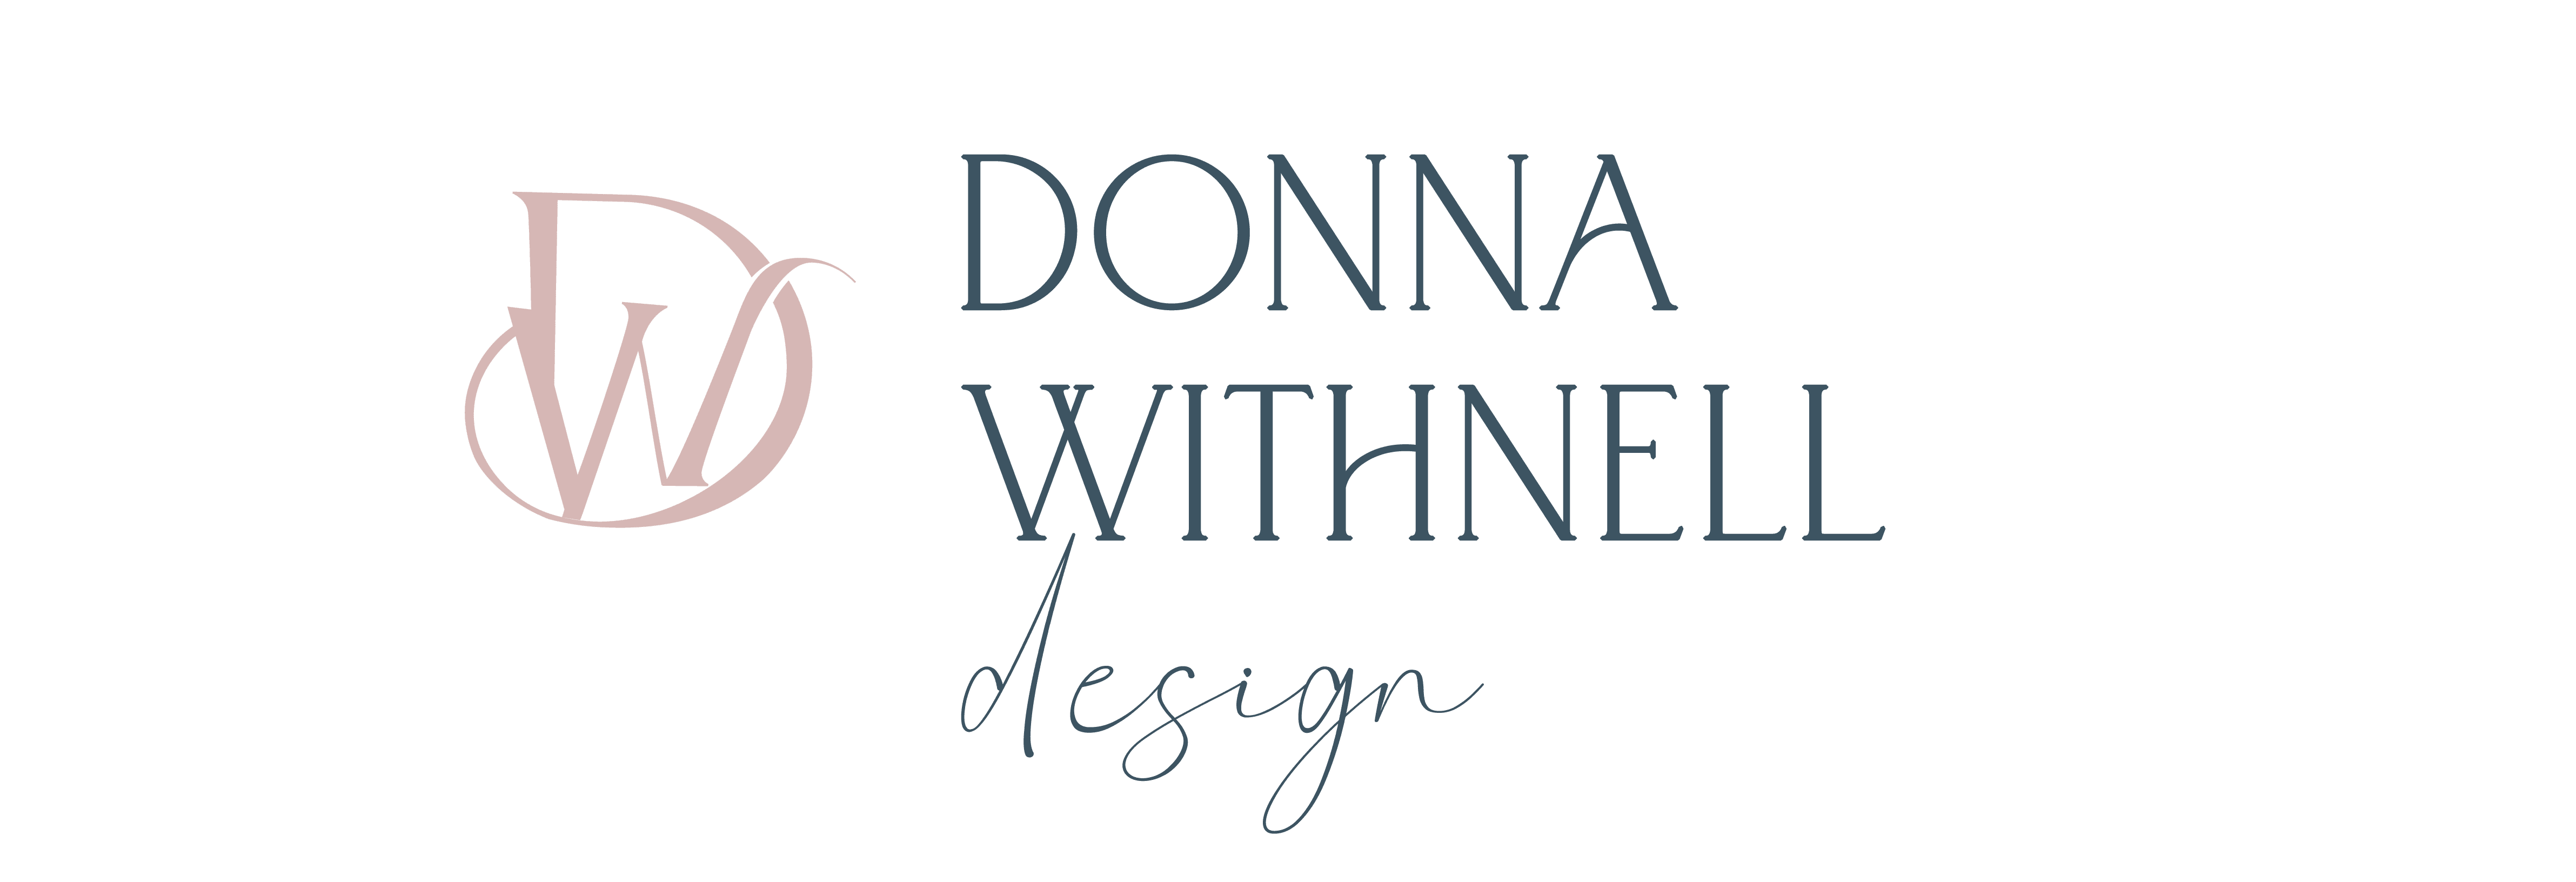 donna withnell logo design